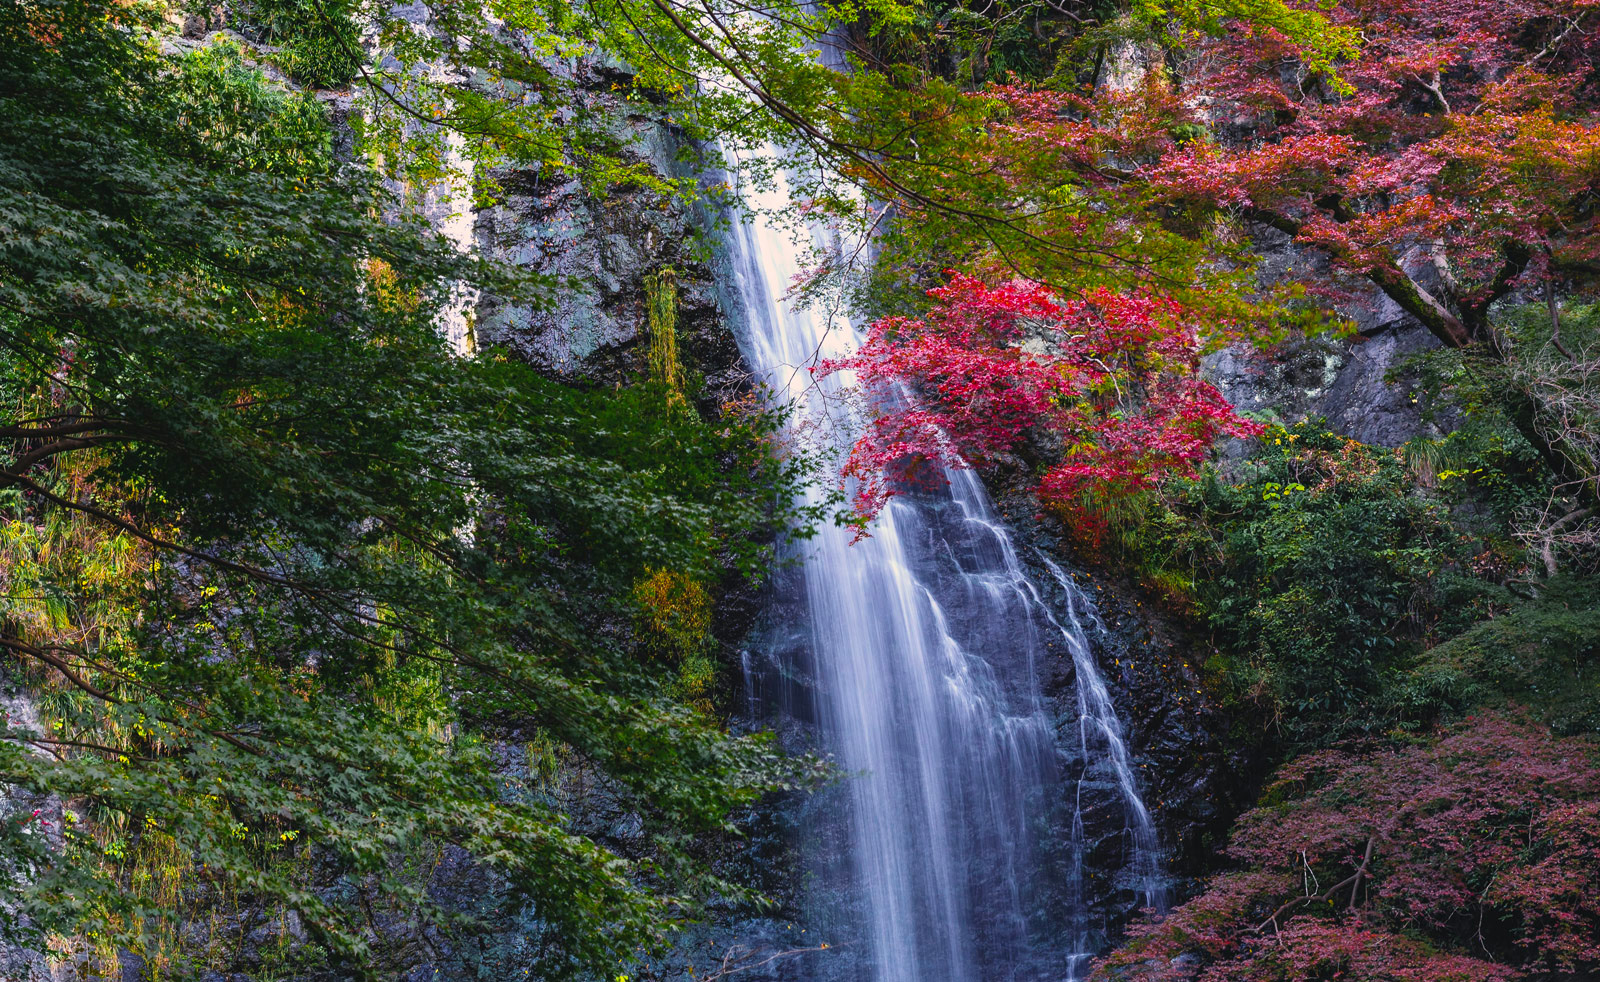 The Saut du Chien waterfall